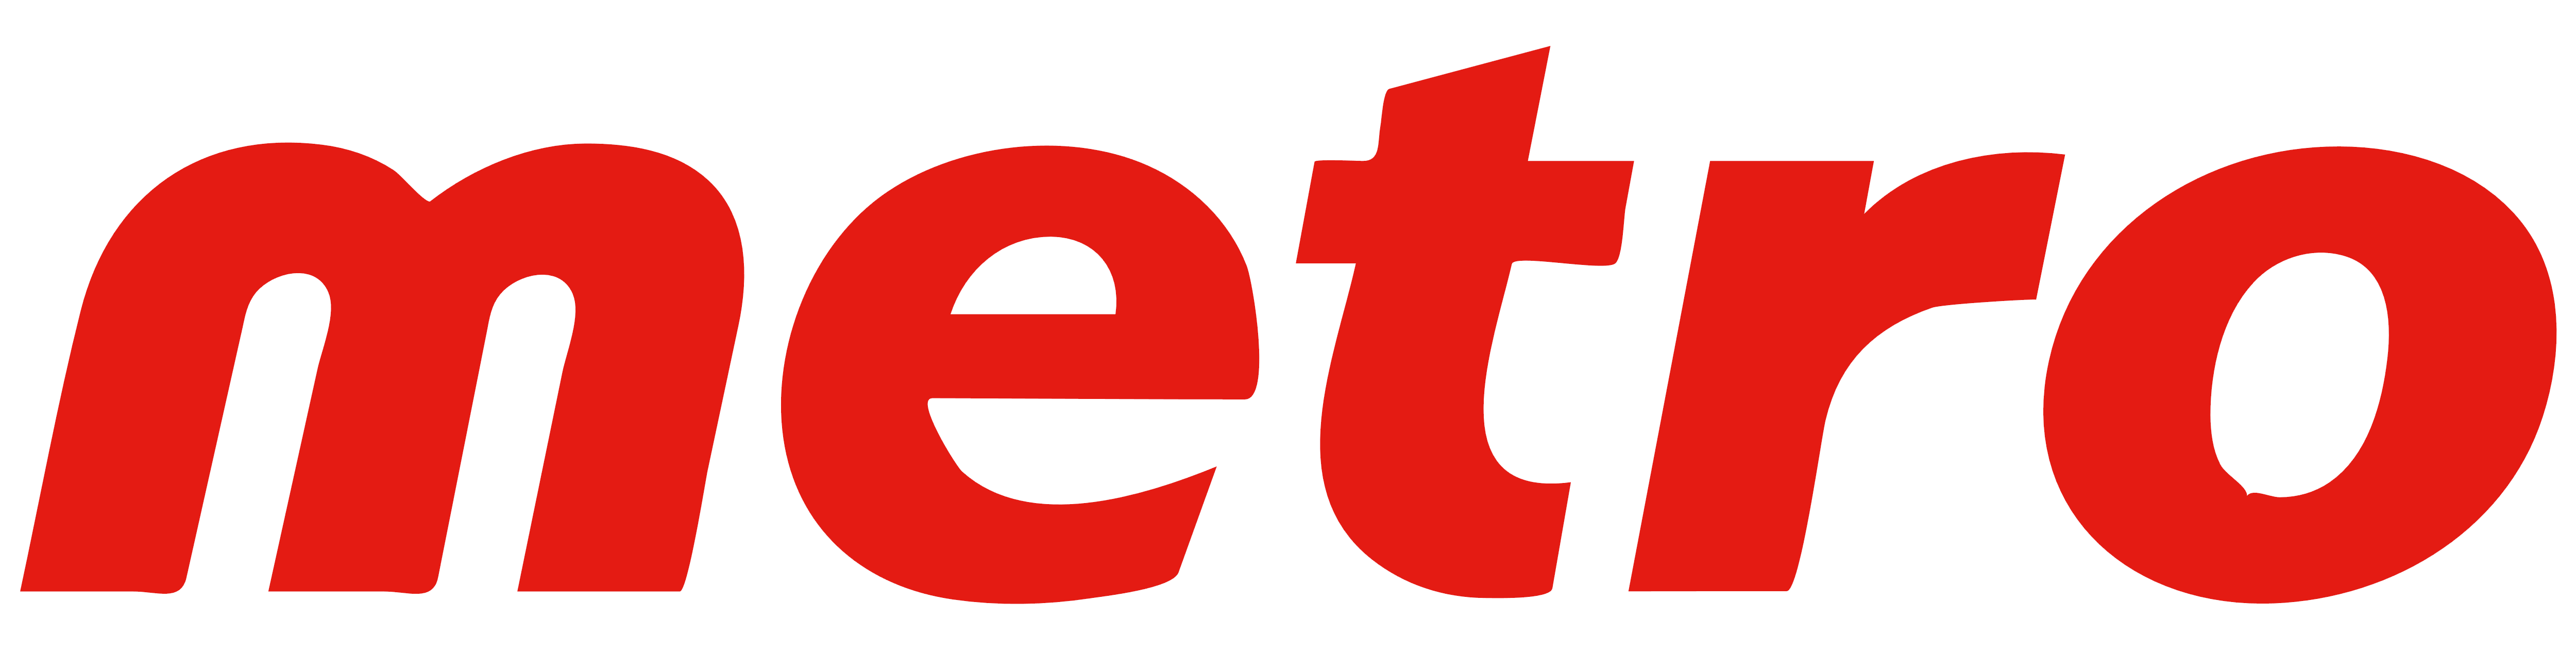 ugi-partner-logo